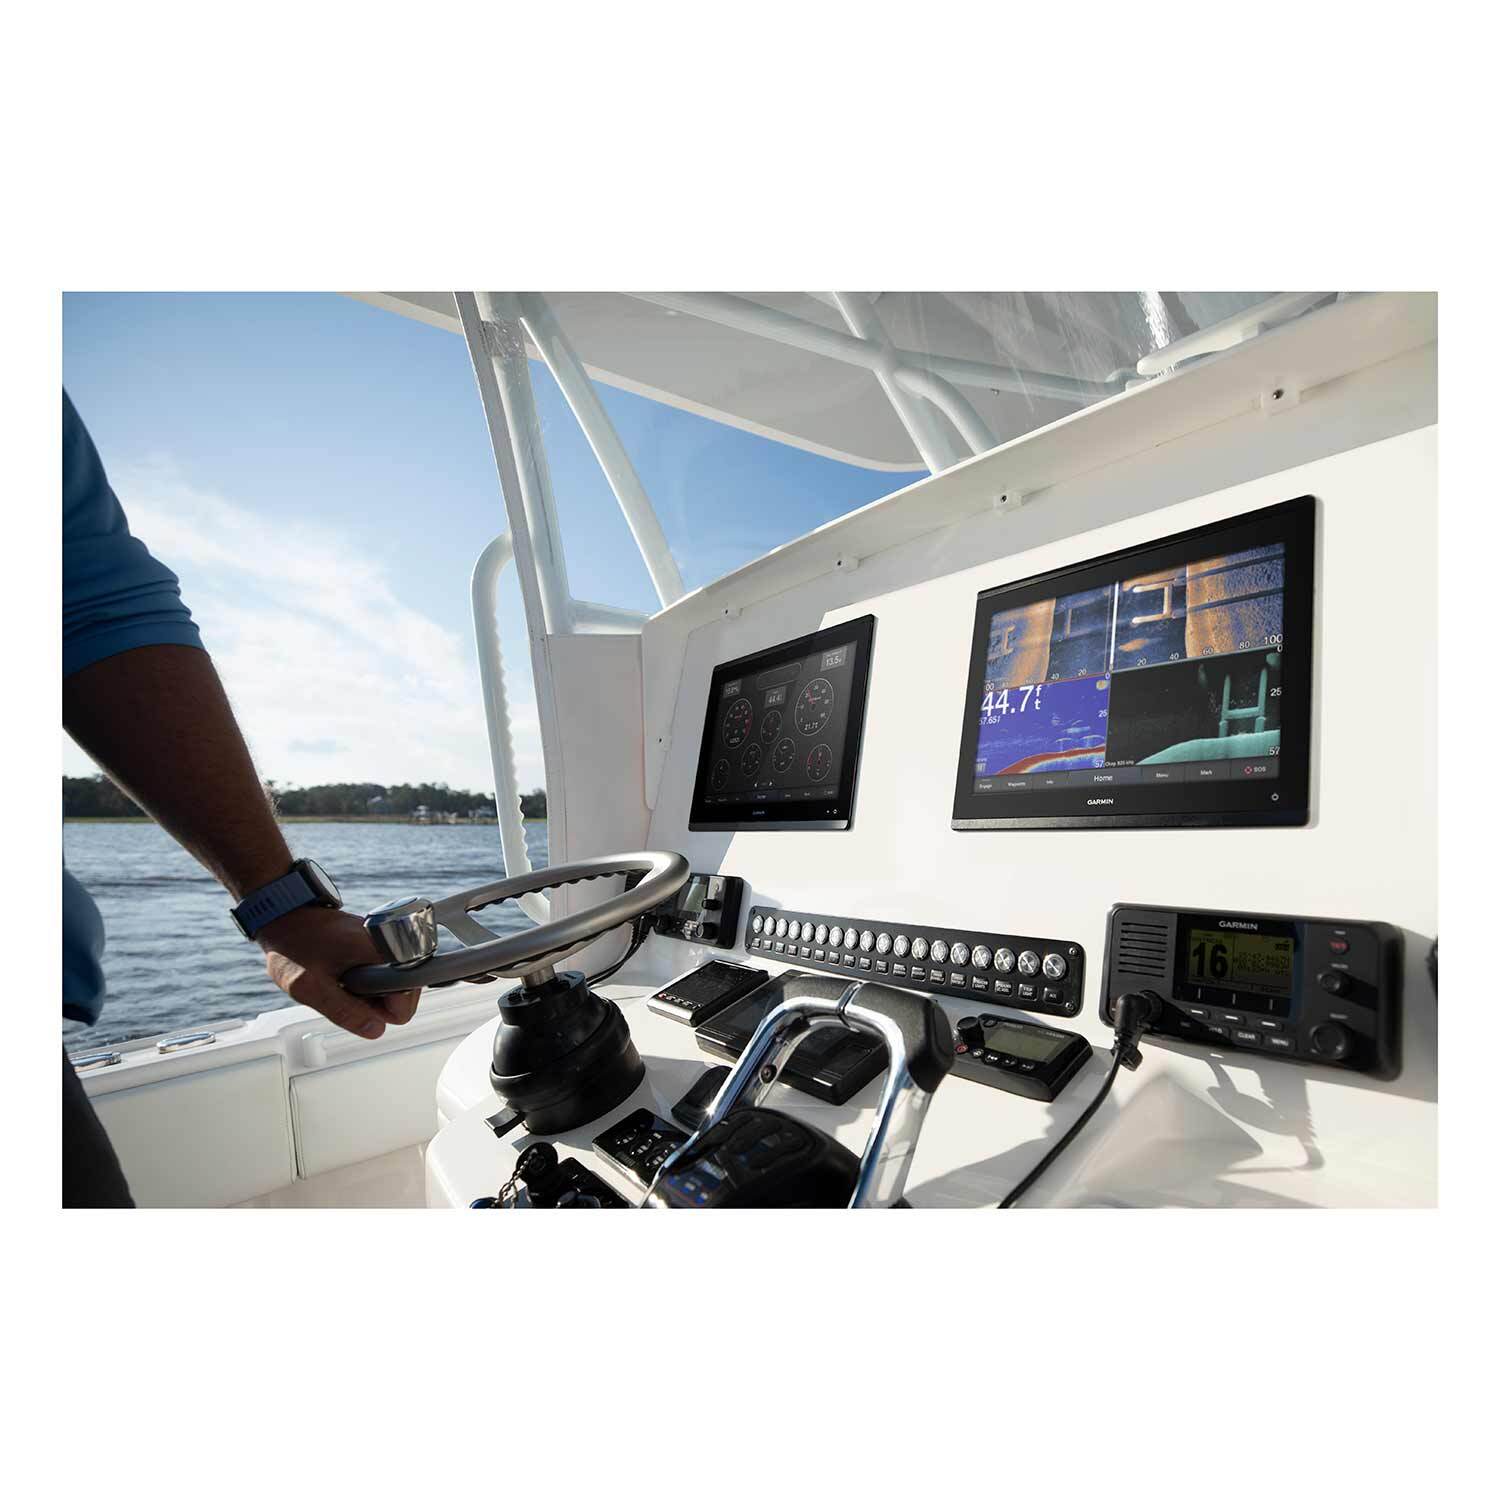 Installing a Garmin 943xsv GPS on my boat 